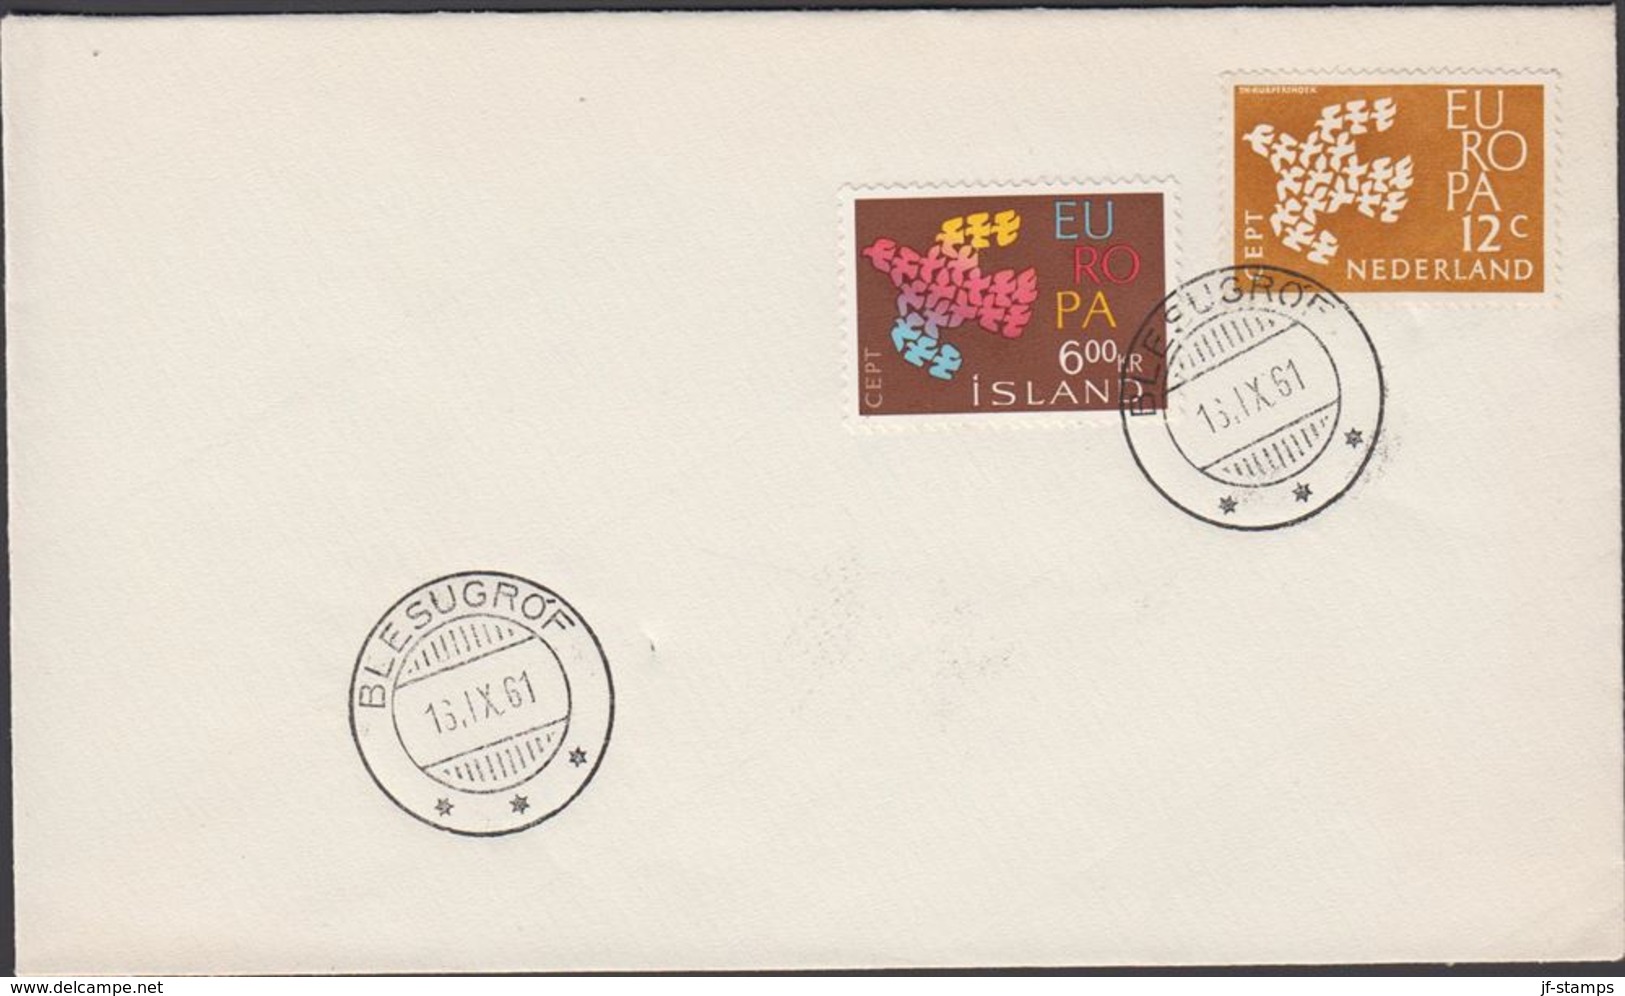 BLESUGROF 16. IX. 61 1961. Europe. CEPT. 6 Kr. + 12 C. NEDERLAND (Michel 355) - JF310158 - Covers & Documents